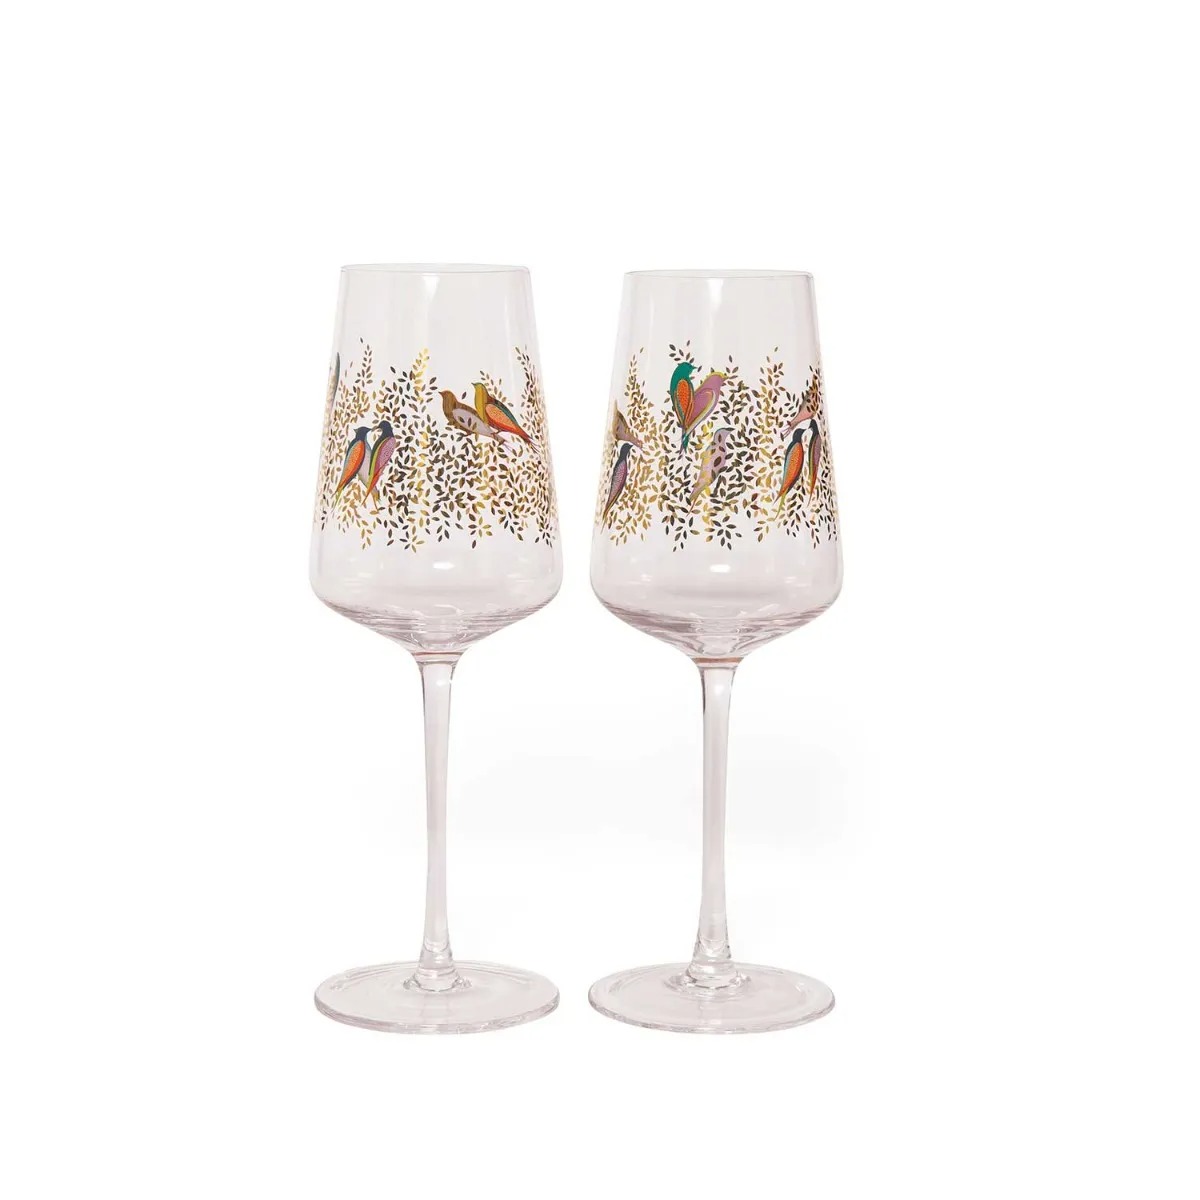 Sara Miller London Chelsea Wine Glasses - Set of 2